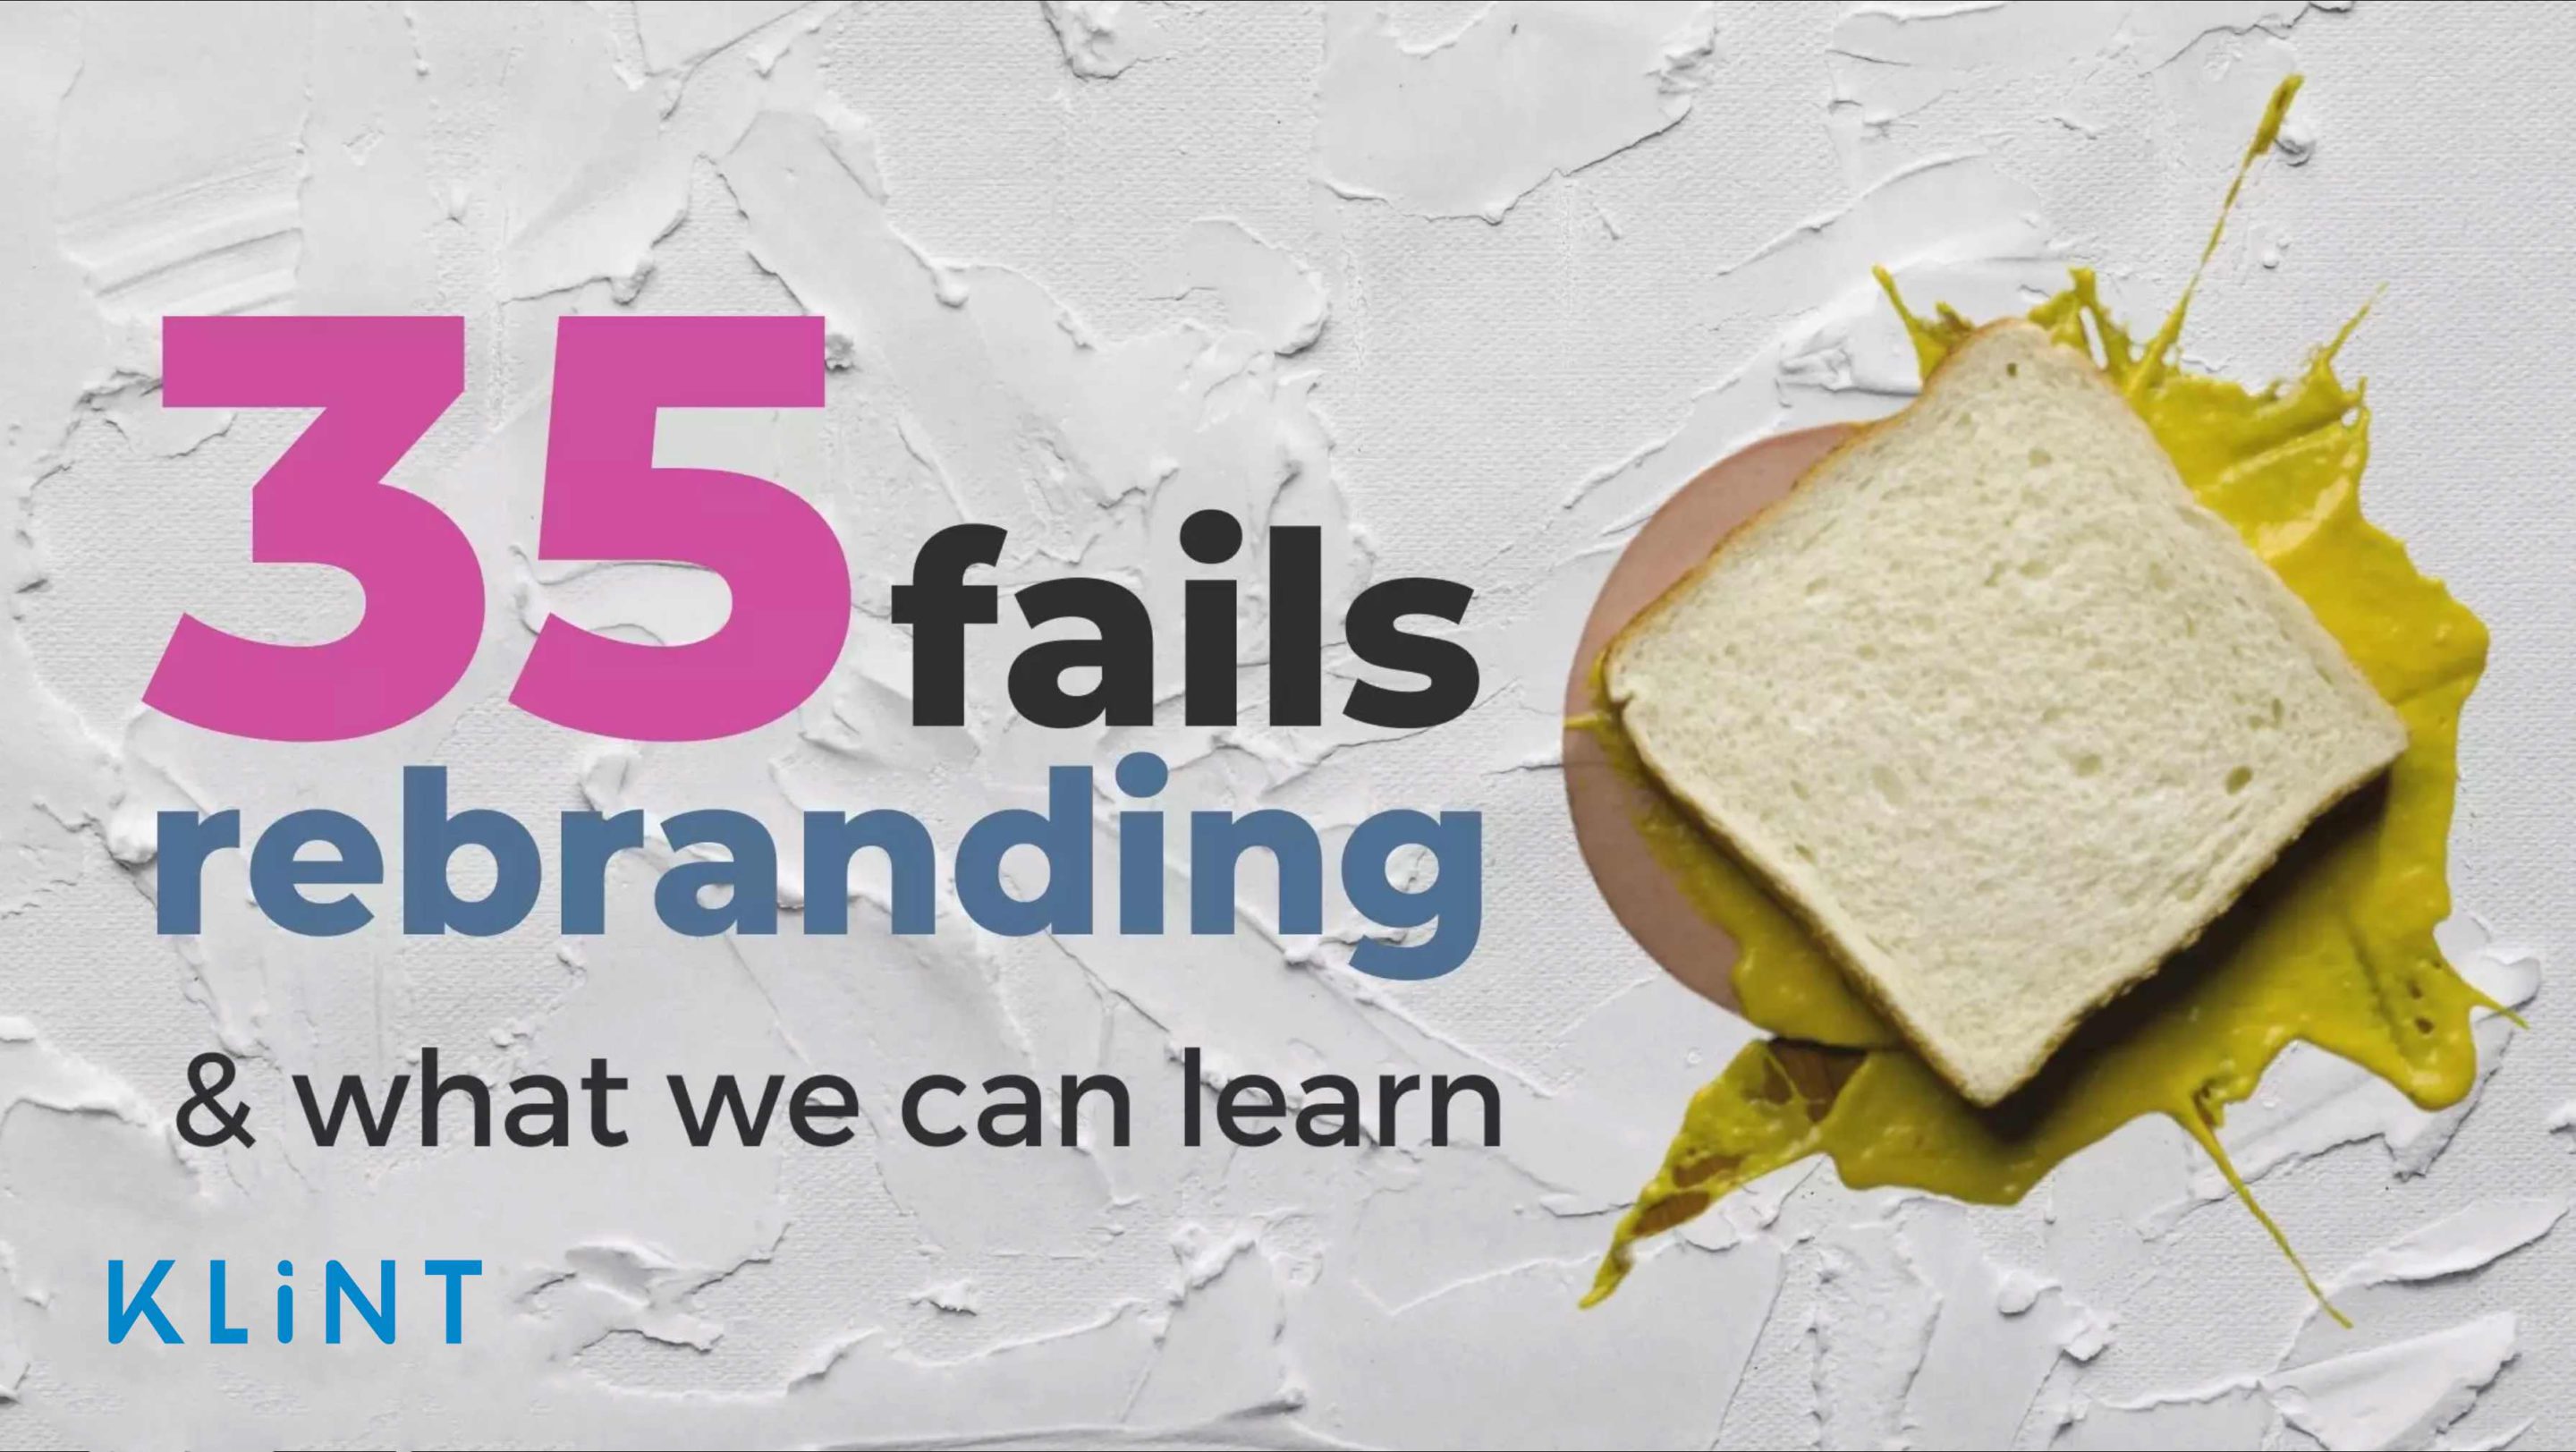 sandwich that has fallen on the floor. text overlaid: "rebranding fails"